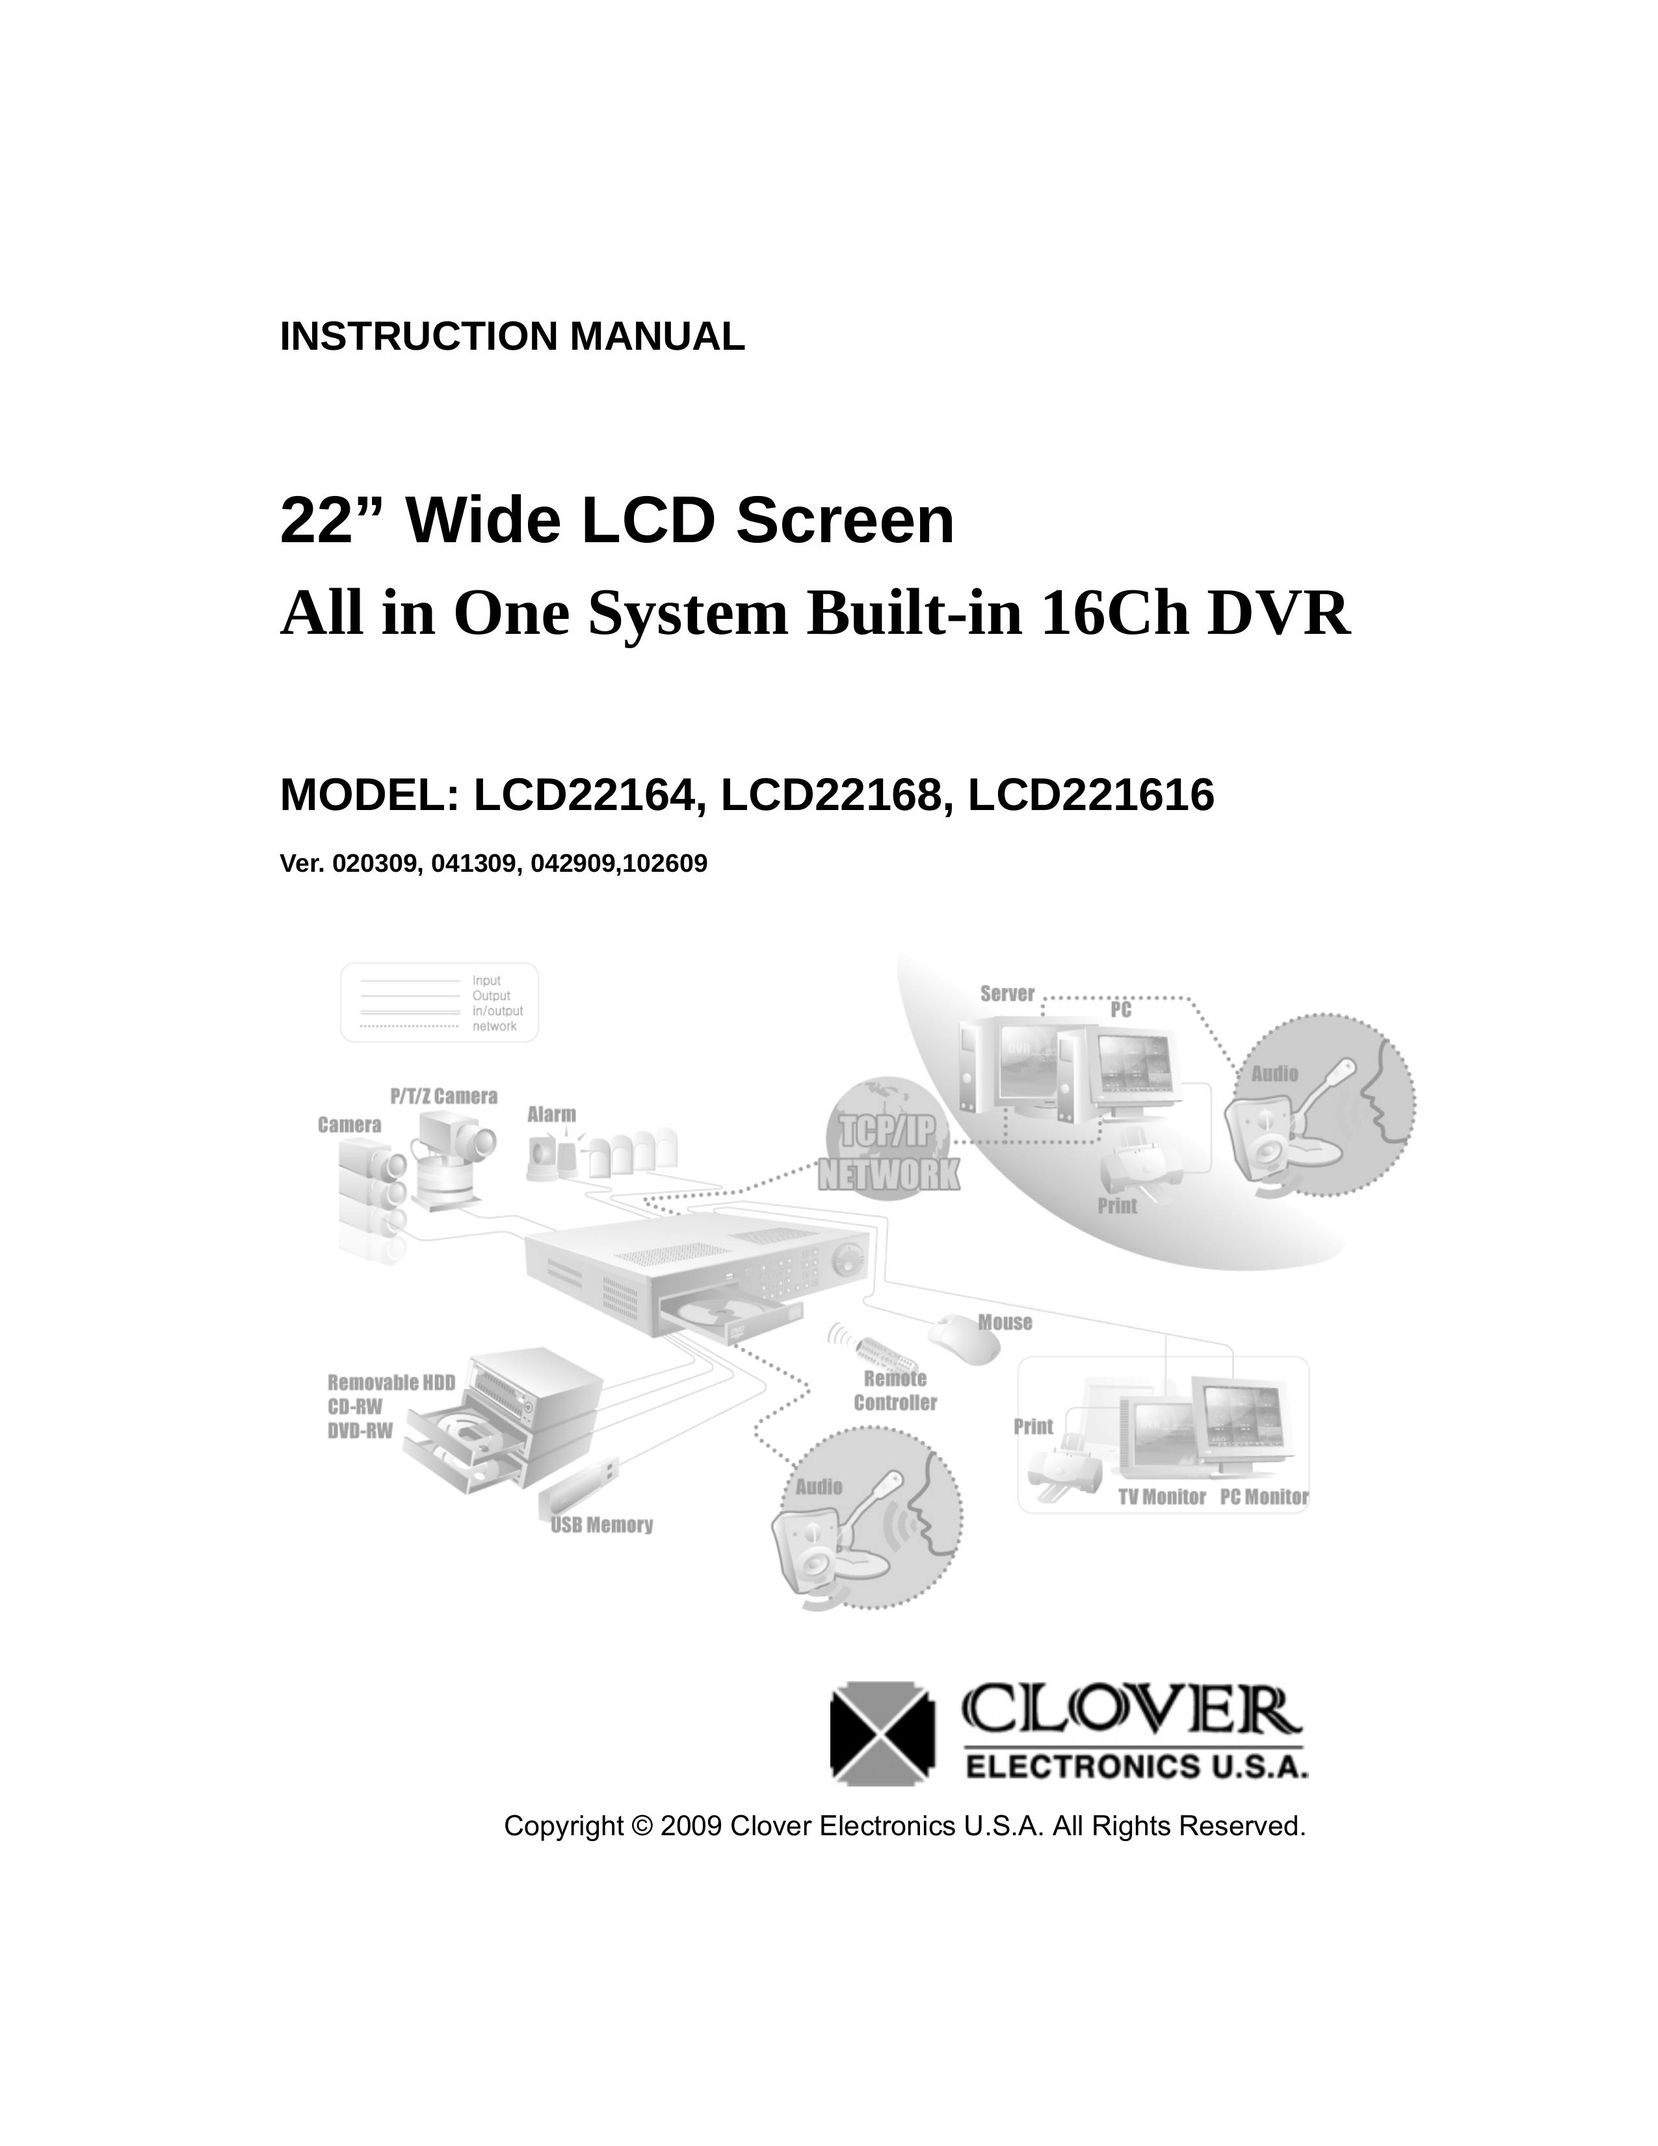 Clover Electronics LCD221616 DVR User Manual